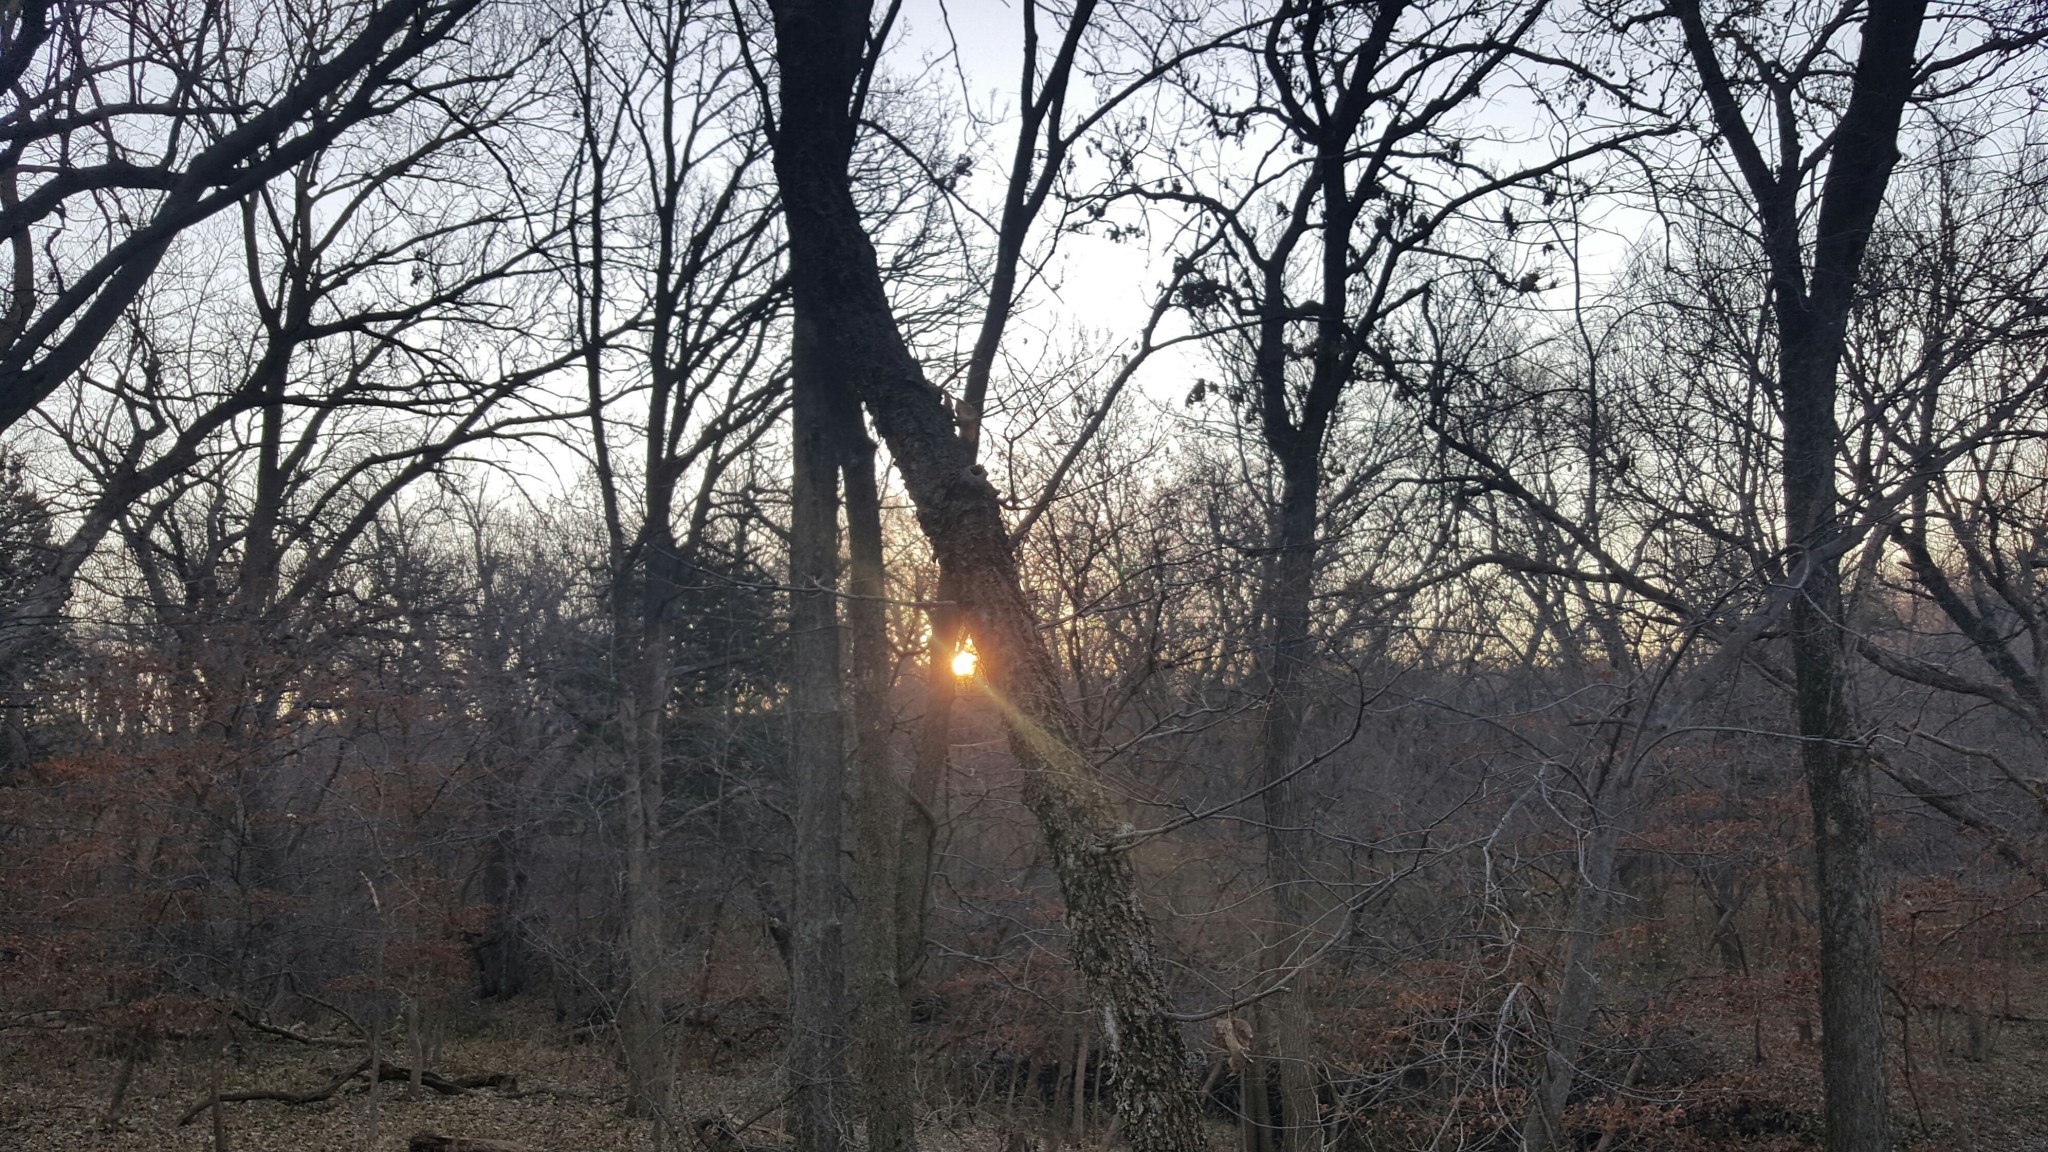 Sunrise from the deer hunting treestand in the woods of southeastern Nebraska.